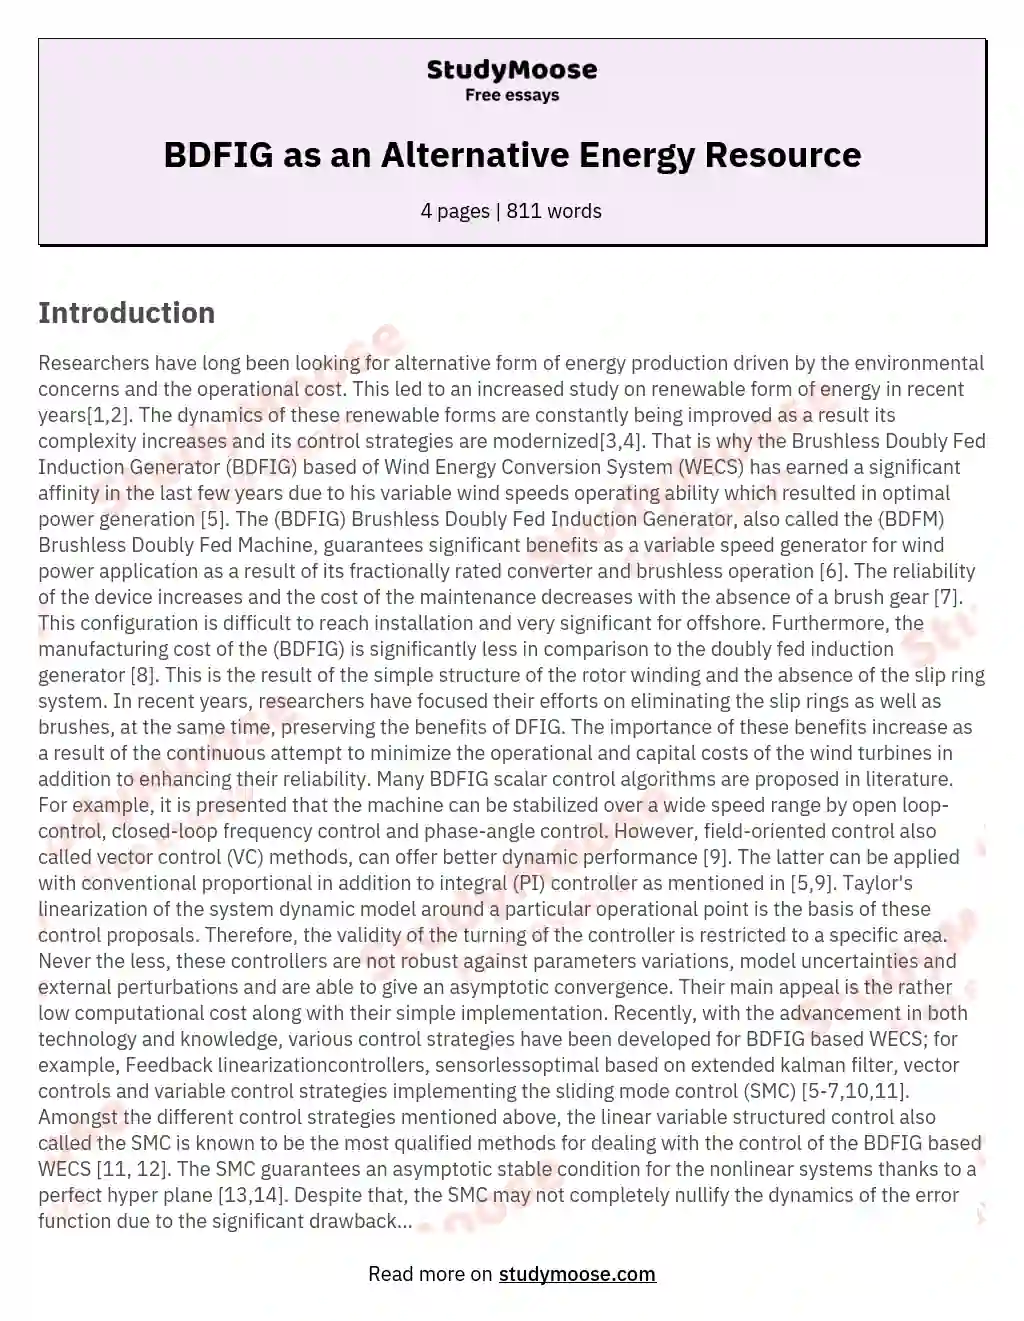 BDFIG as an Alternative Energy Resource essay